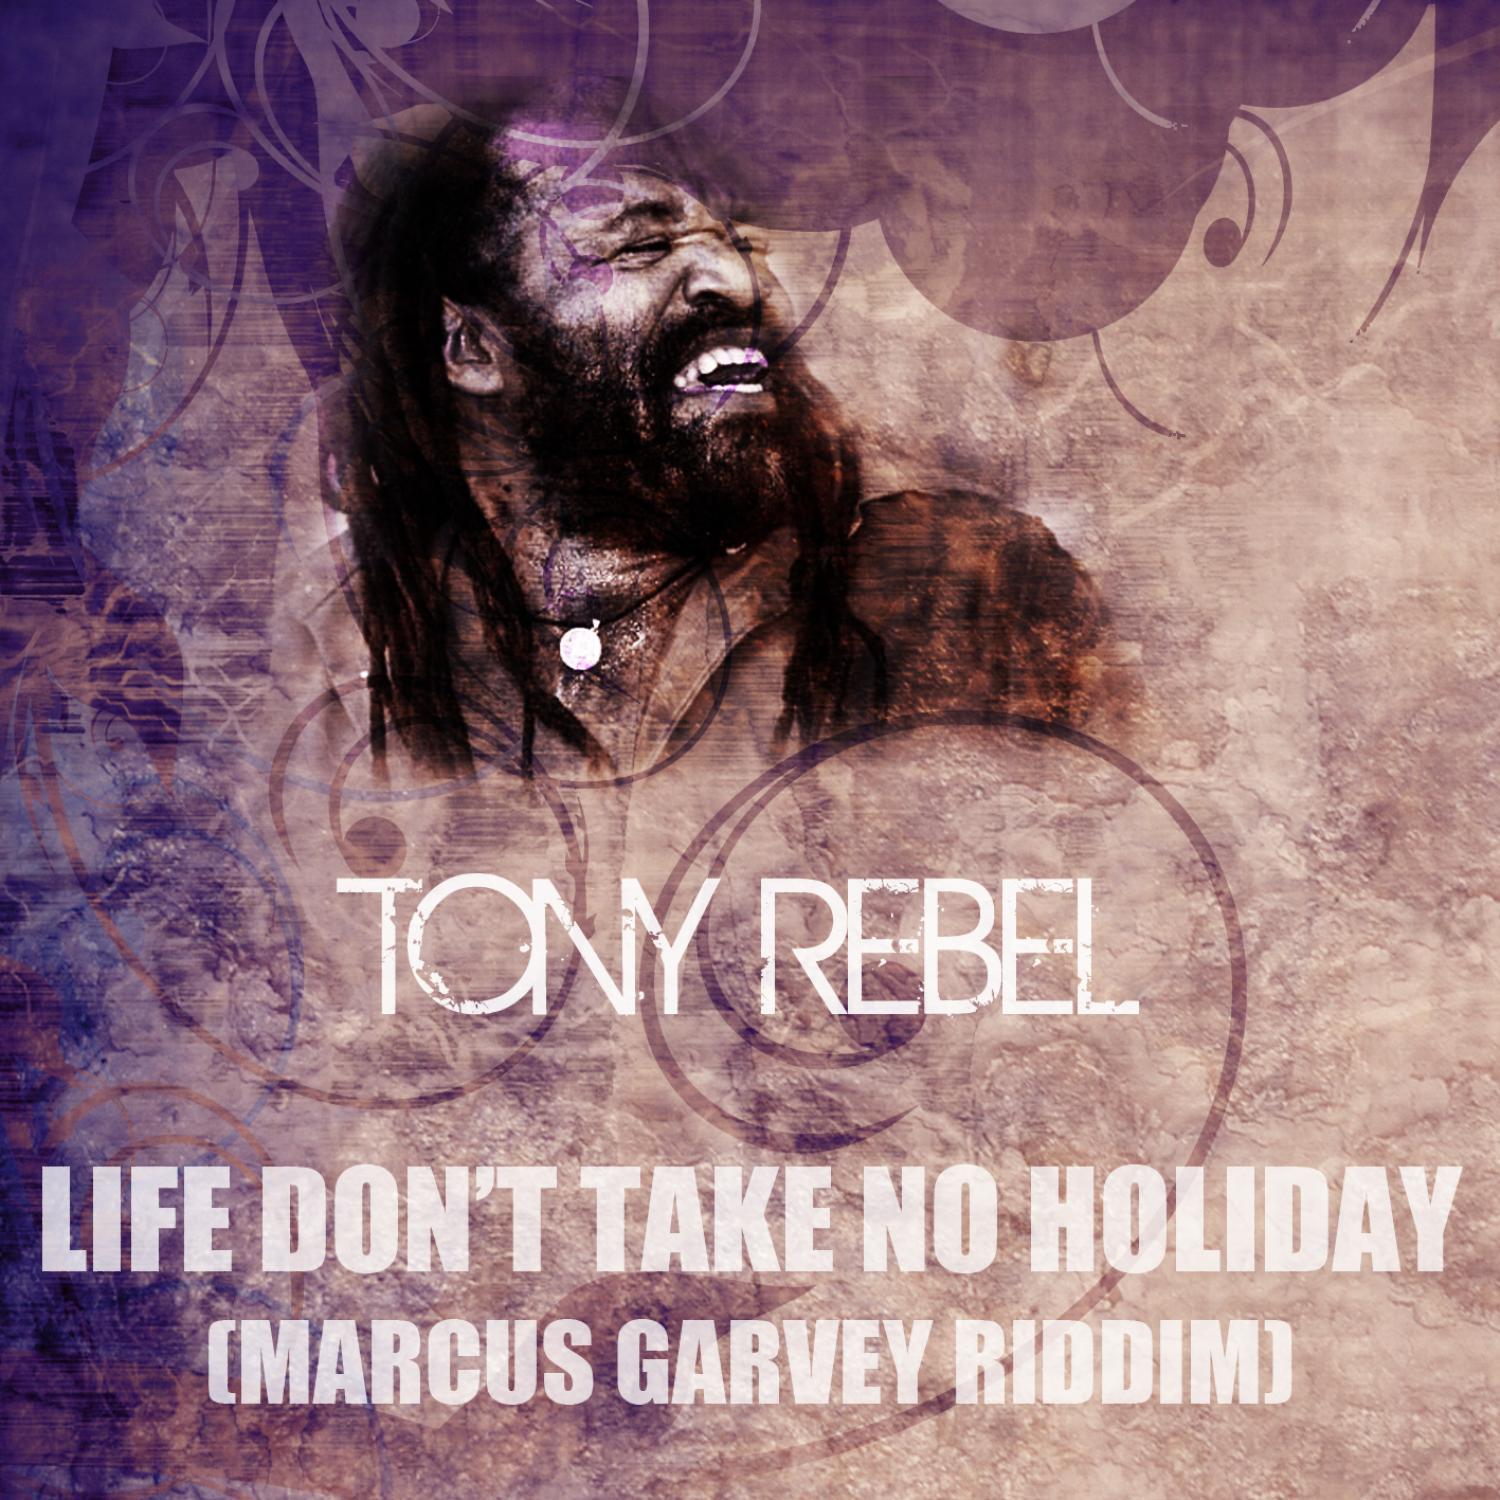 Life Don't Take No Holiday (Marcus Garvey Riddim)